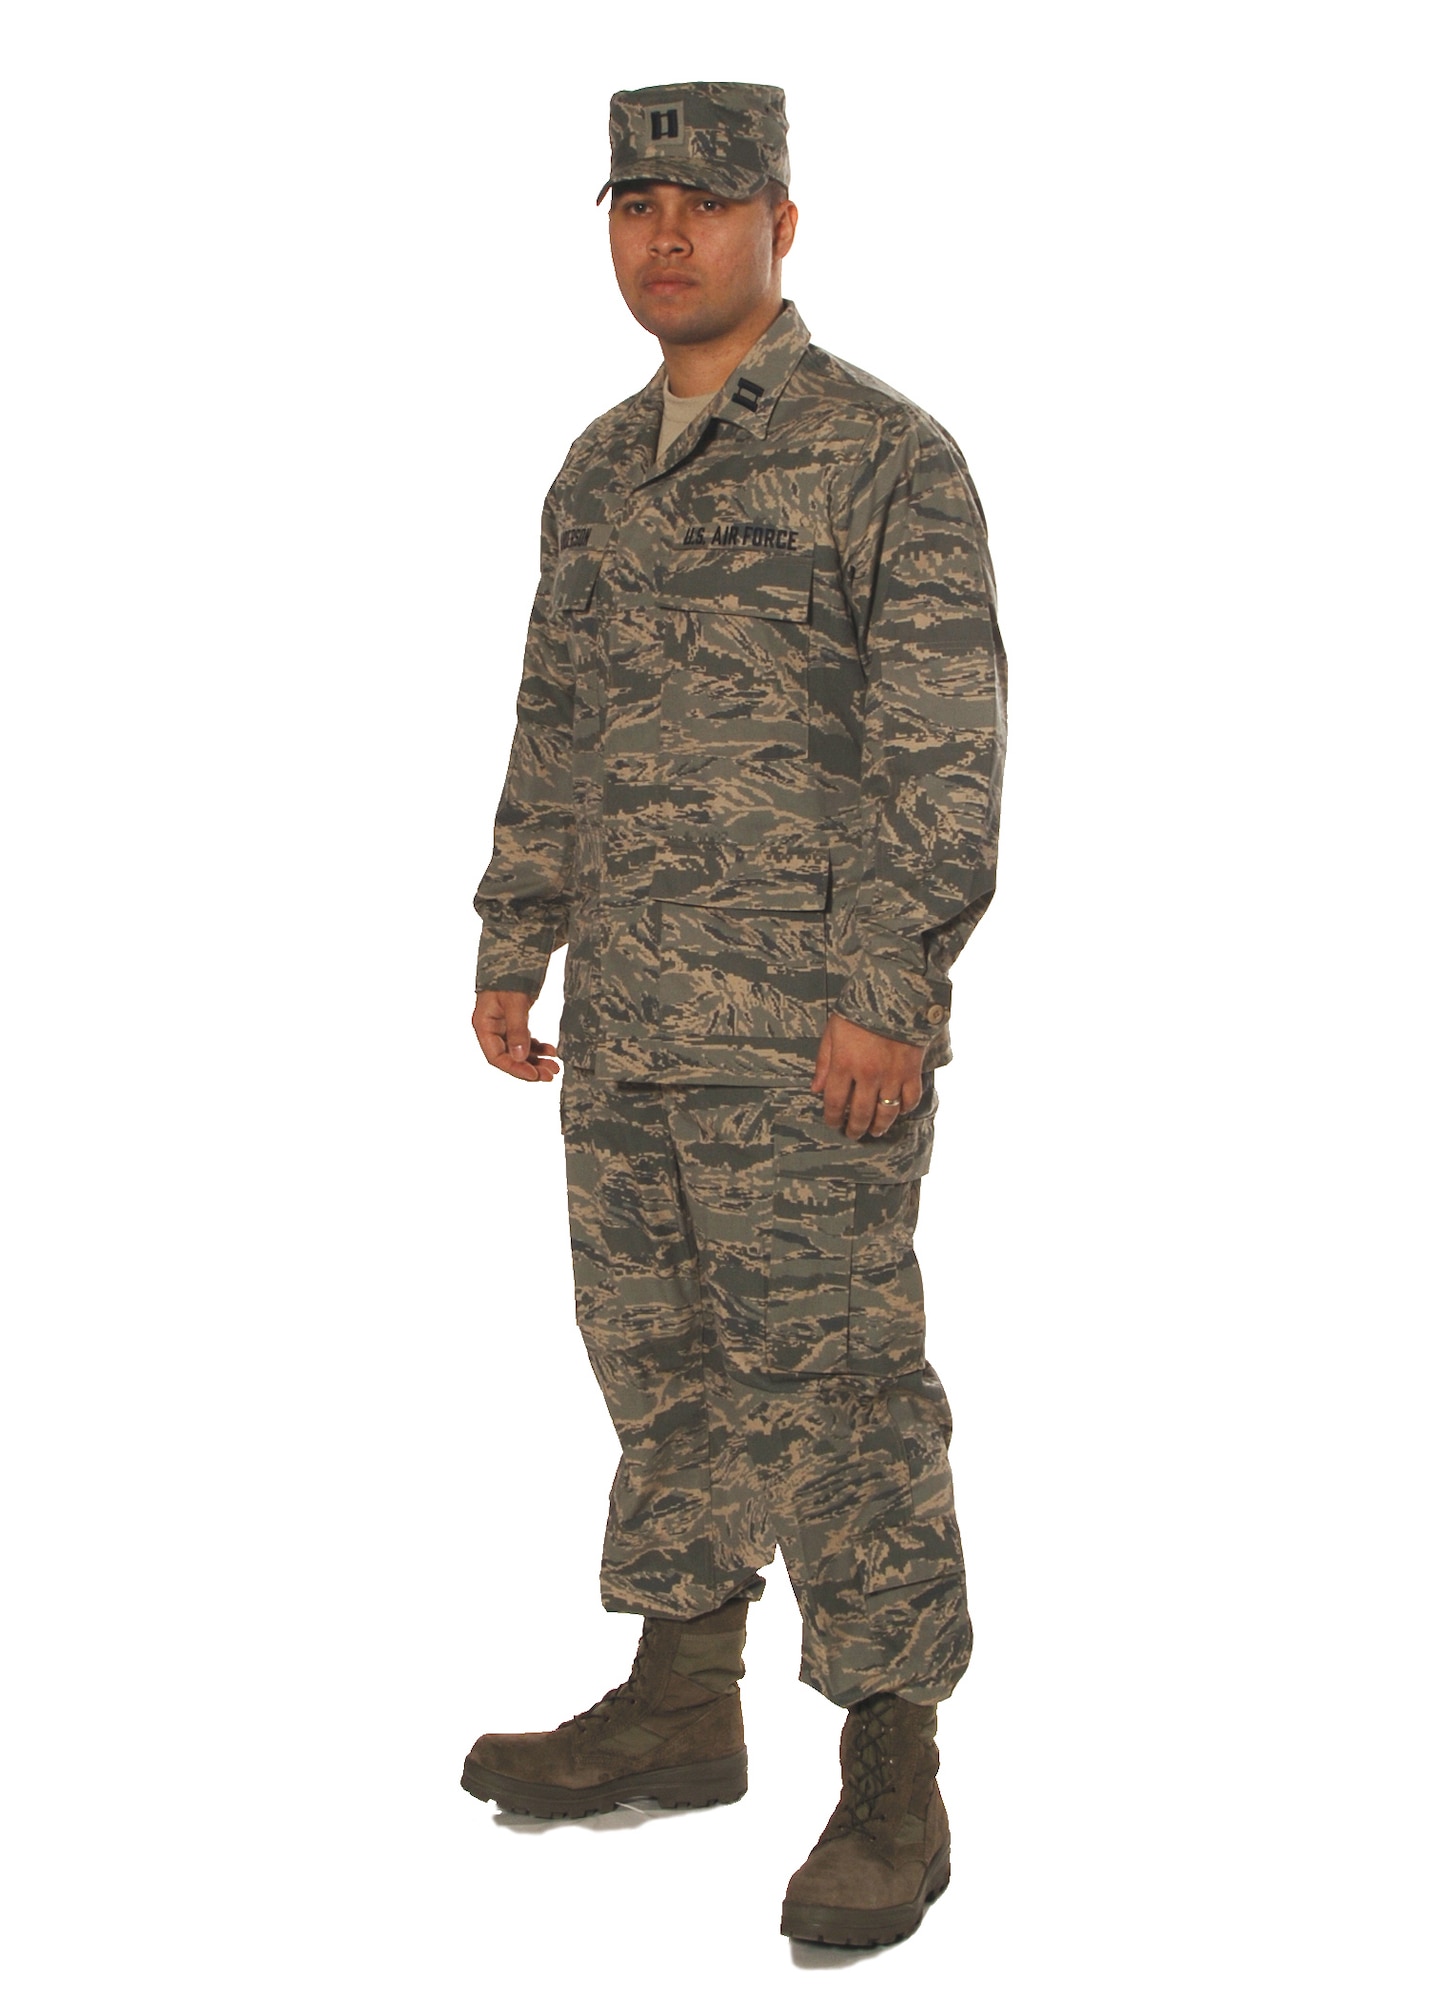 The new Airman Battle Uniform. (U.S. Air Force photo illustration)